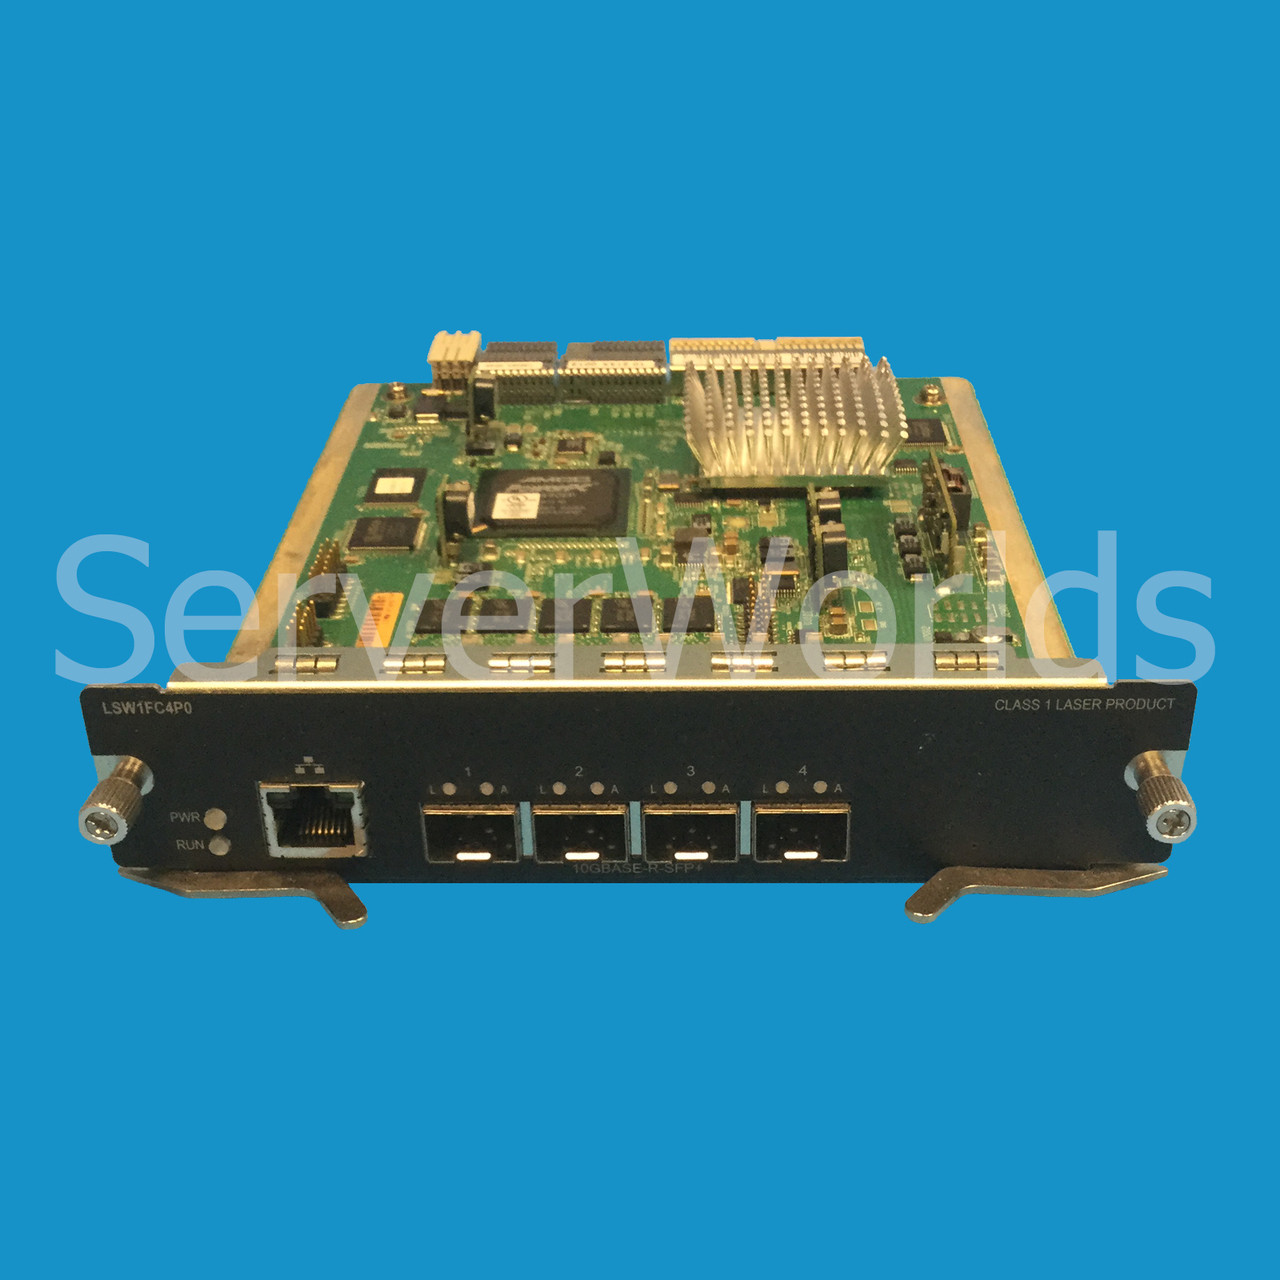 HP JC530A 5820 4 Port 8GBPS FCOE SFP+ Module 